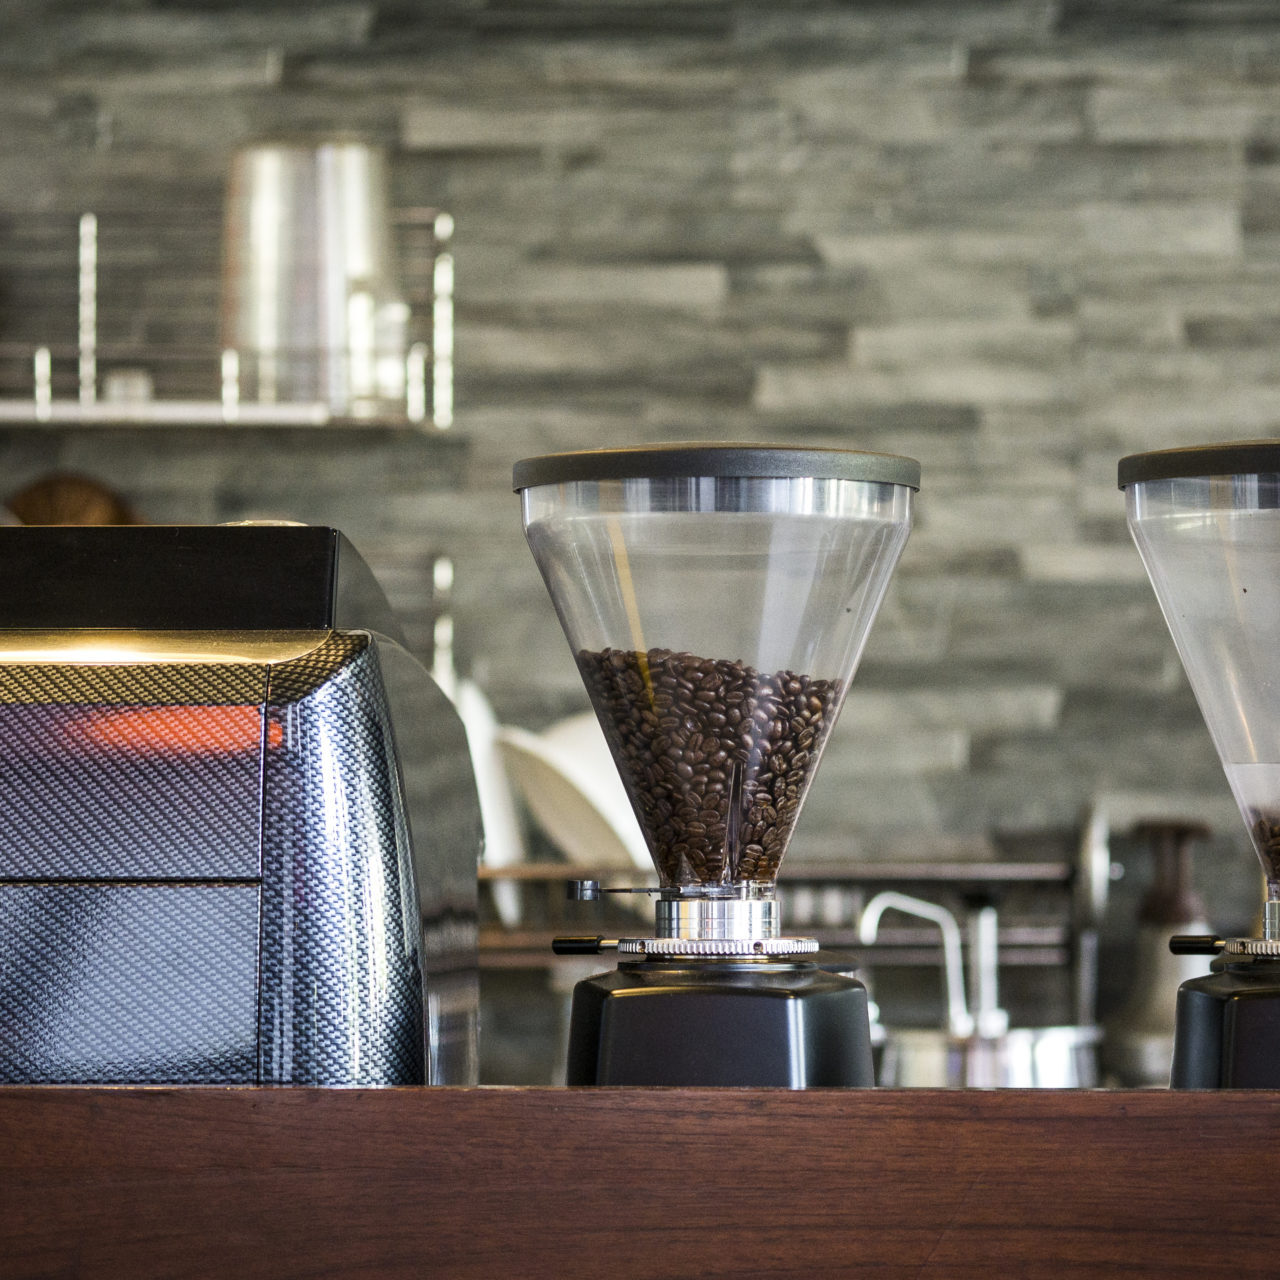 interior coffee shop with coffee machine